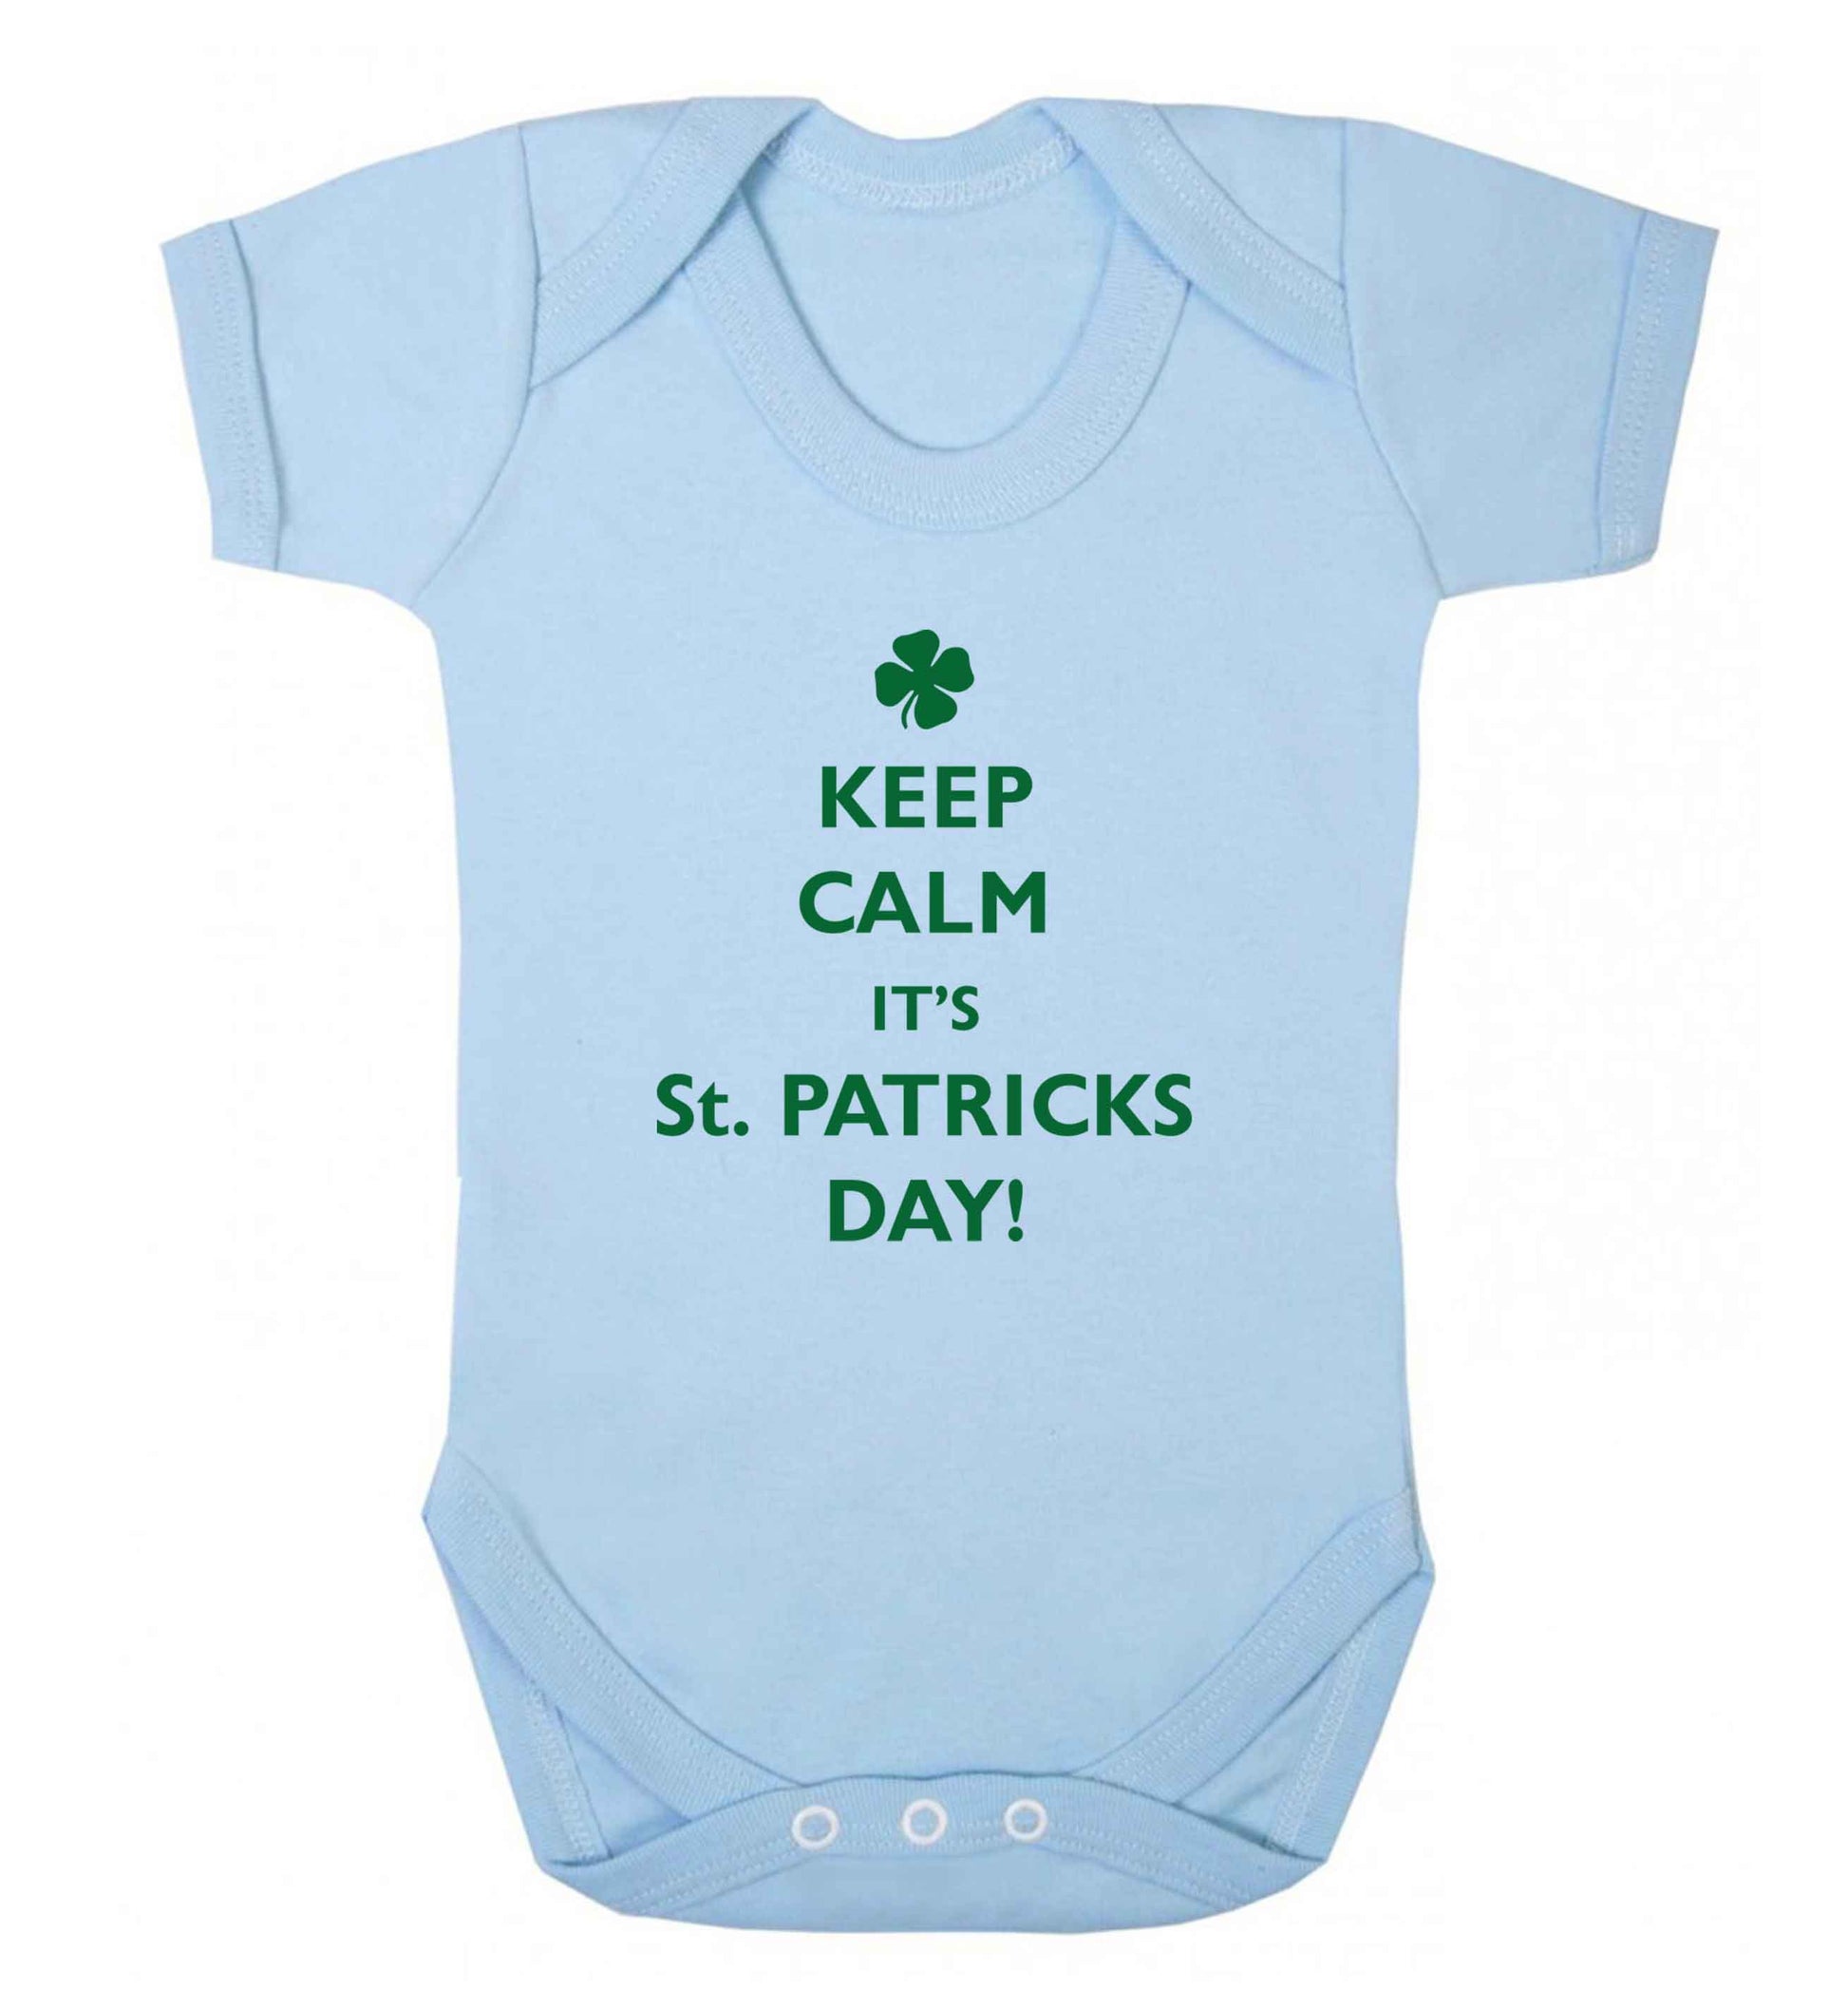 Keep calm it's St.Patricks day baby vest pale blue 18-24 months